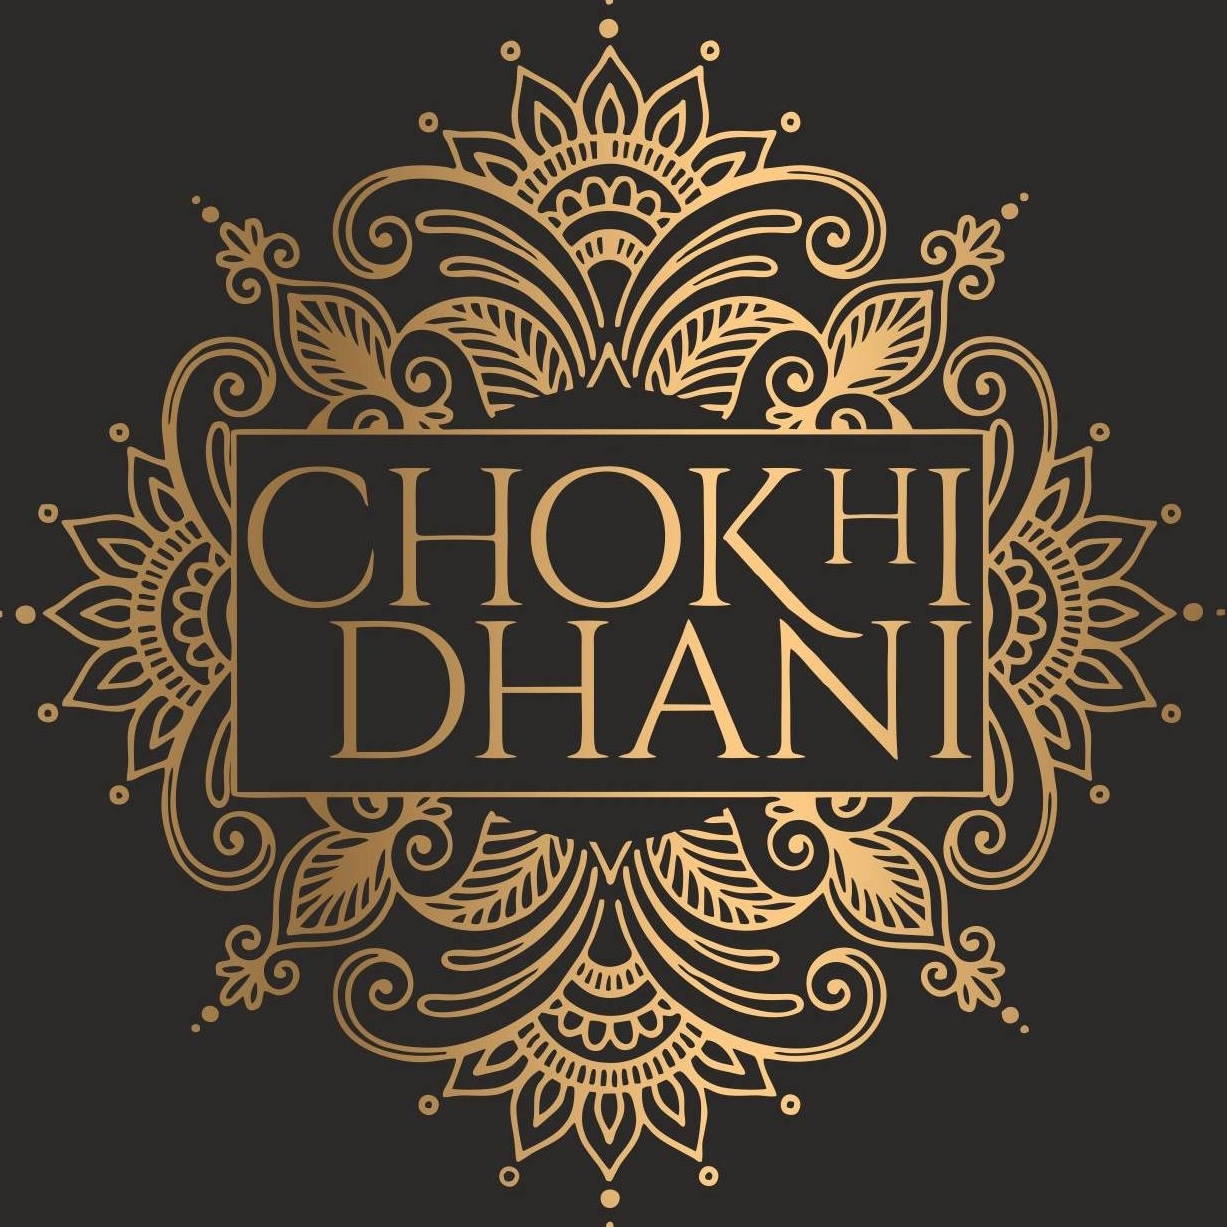 Chokidhani